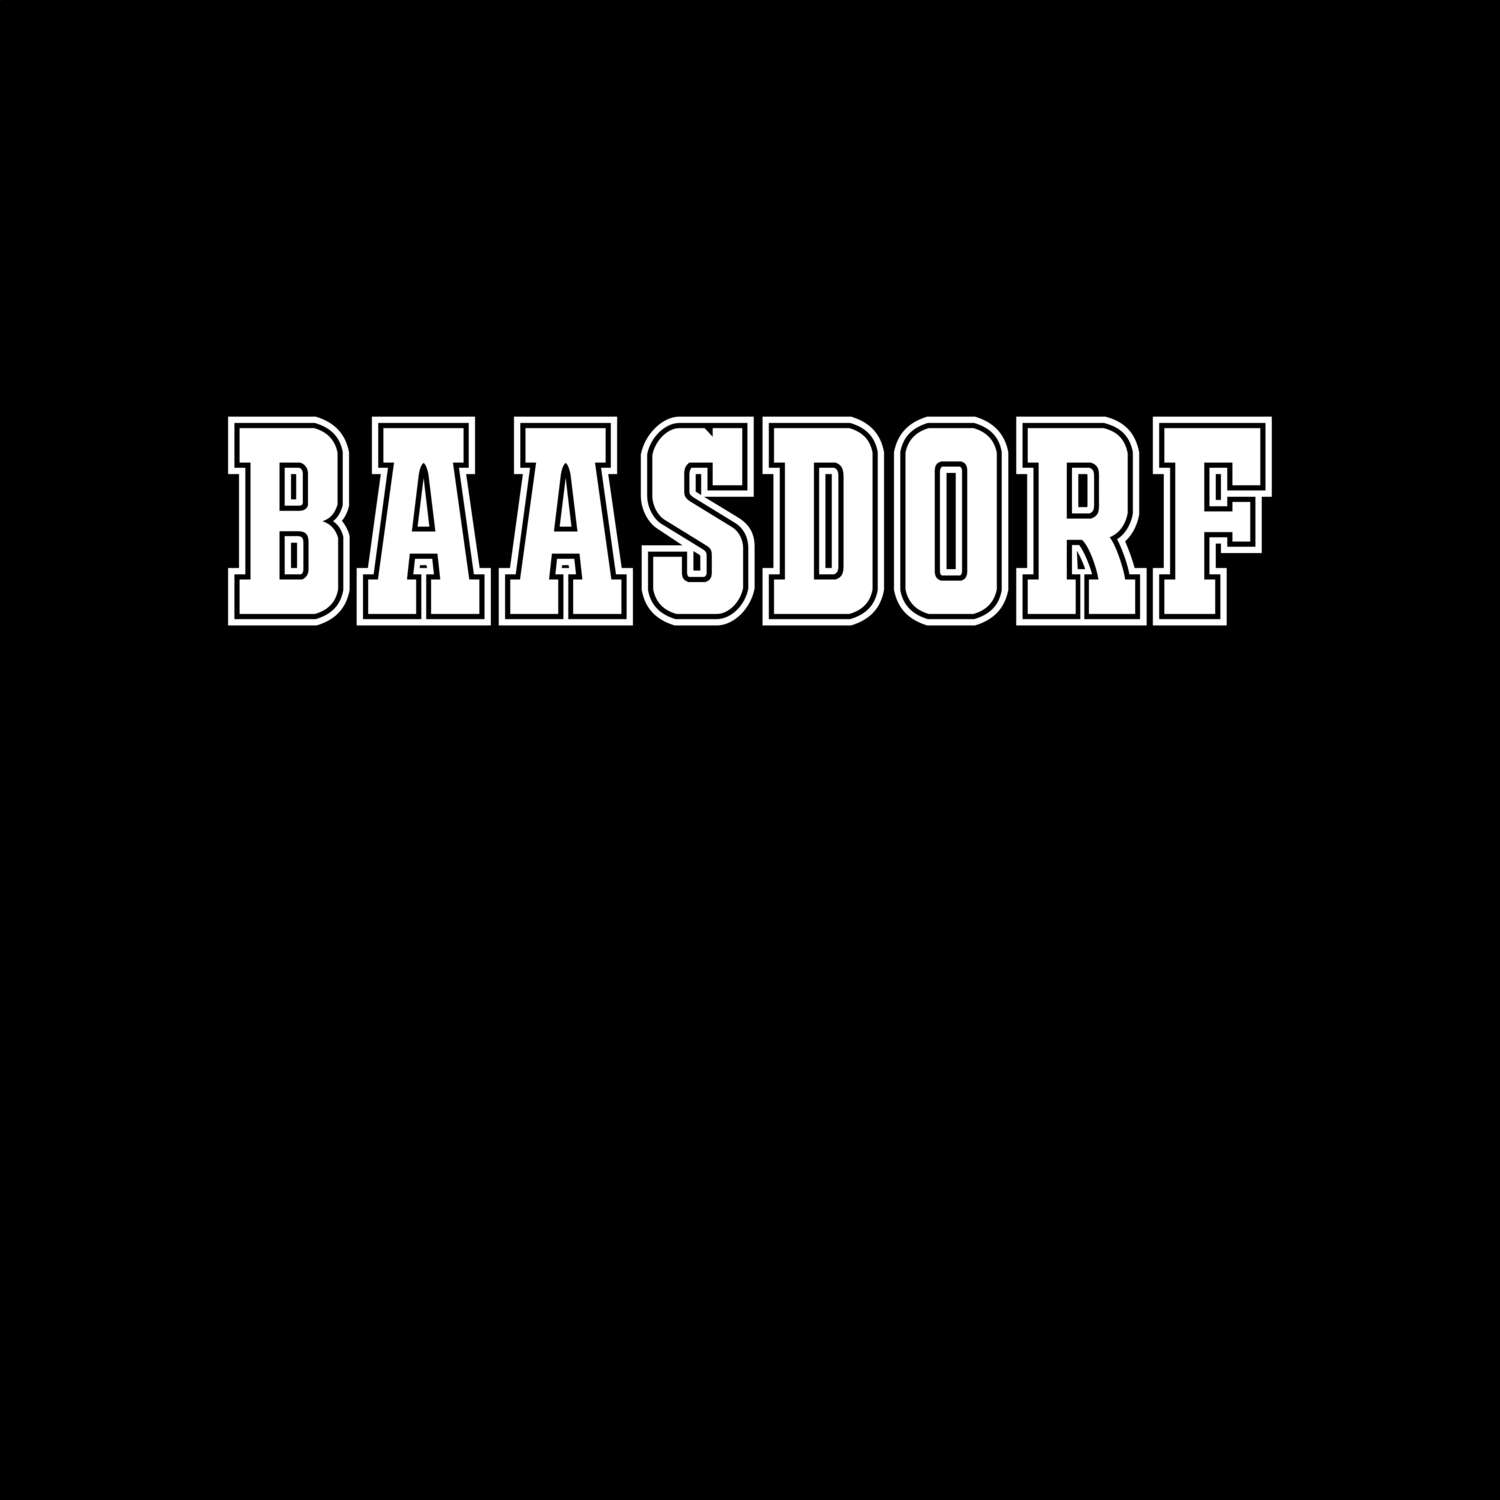 Baasdorf T-Shirt »Classic«